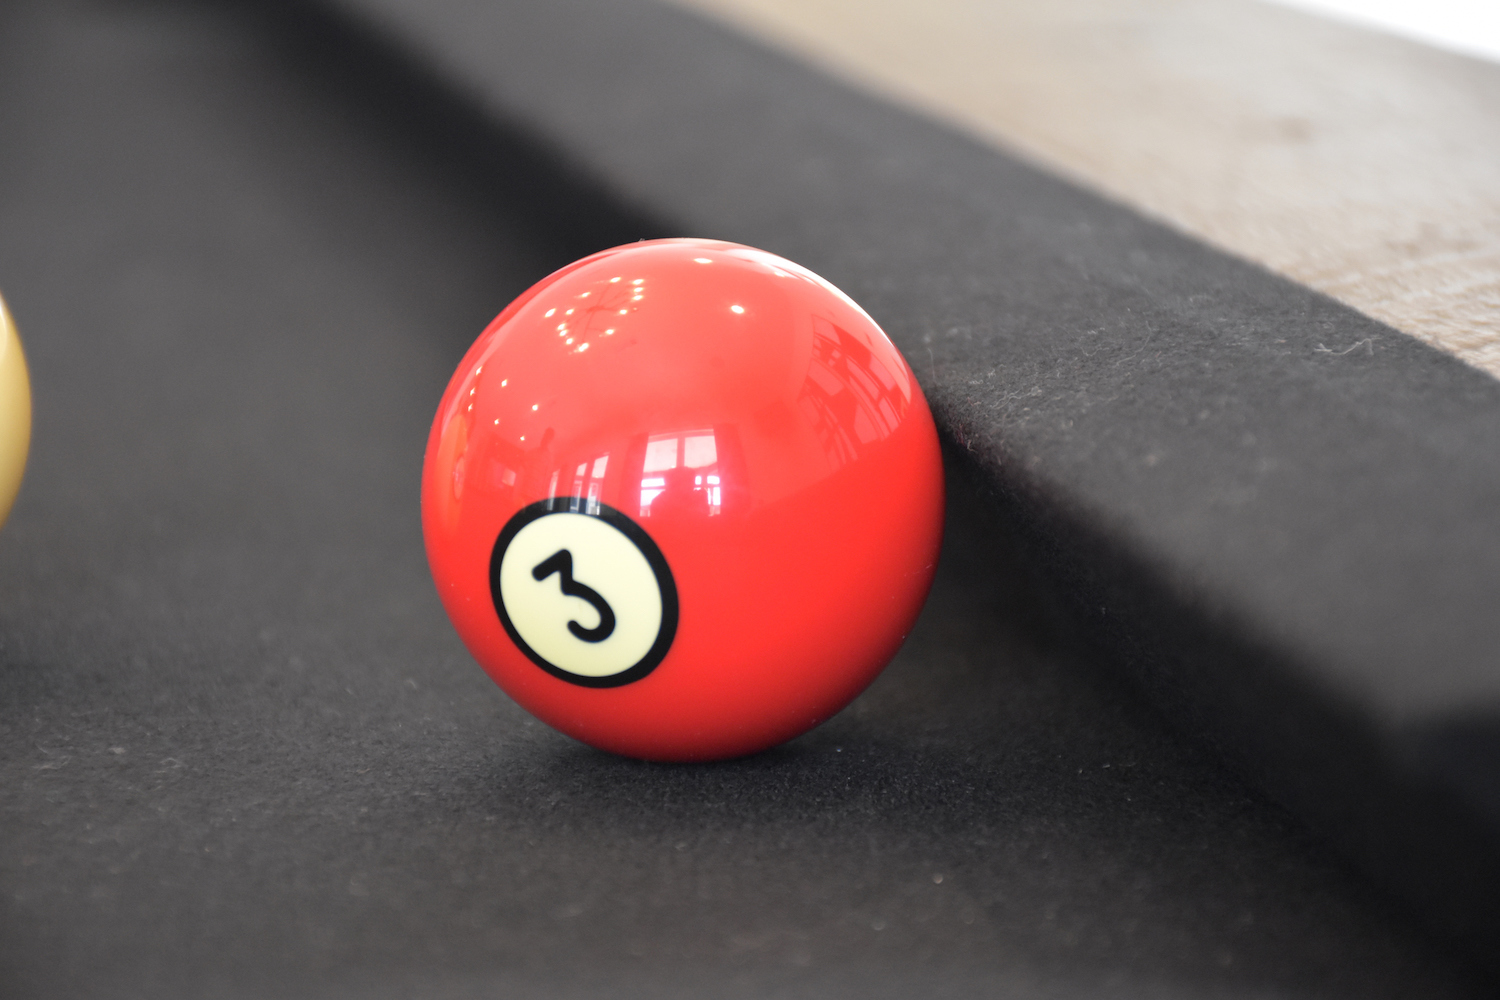 Black billiard table, billiard balls in a pool table, aiming at 3 balls